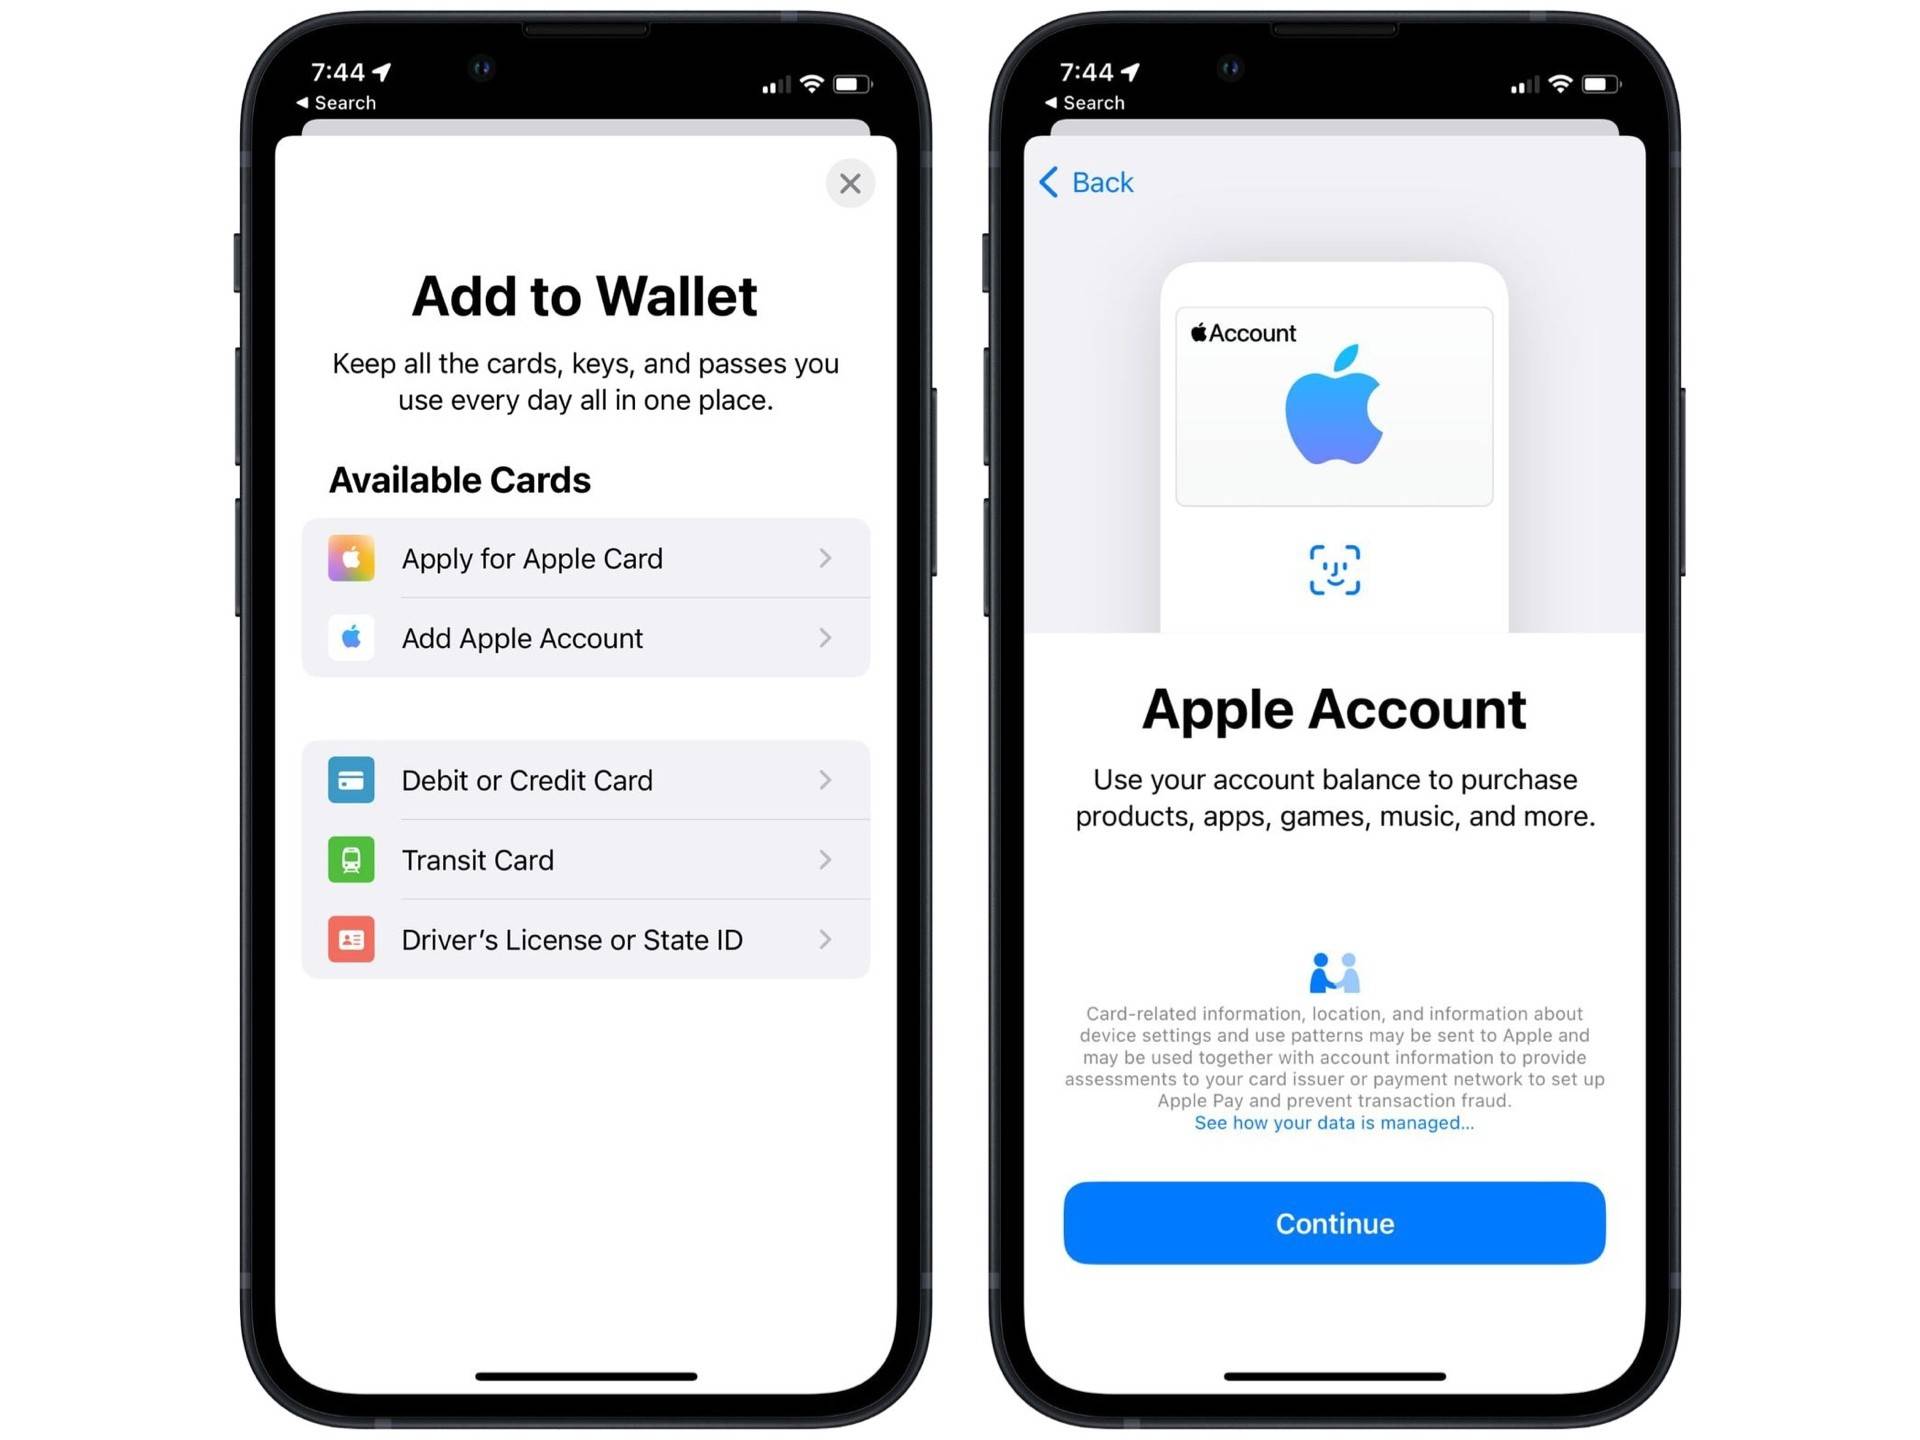 How to setup Apple Account Card